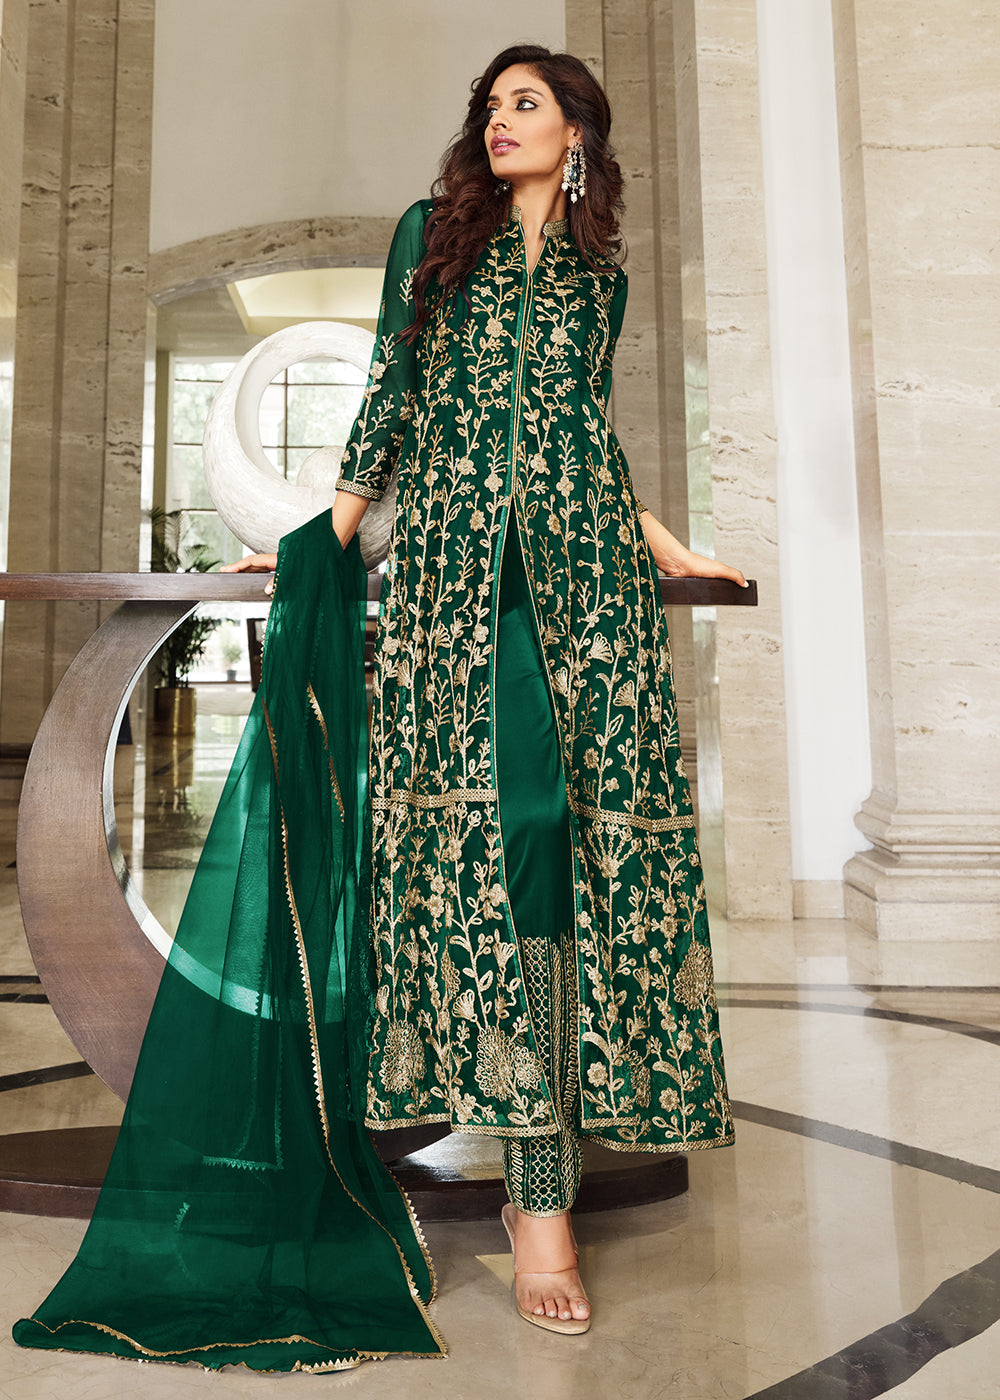 Buy Now Pretty Dark Green Designer Front Slit Anarkali Dress Online in USA, UK, Australia, New Zealand, Canada & Worldwide at Empress Clothing.